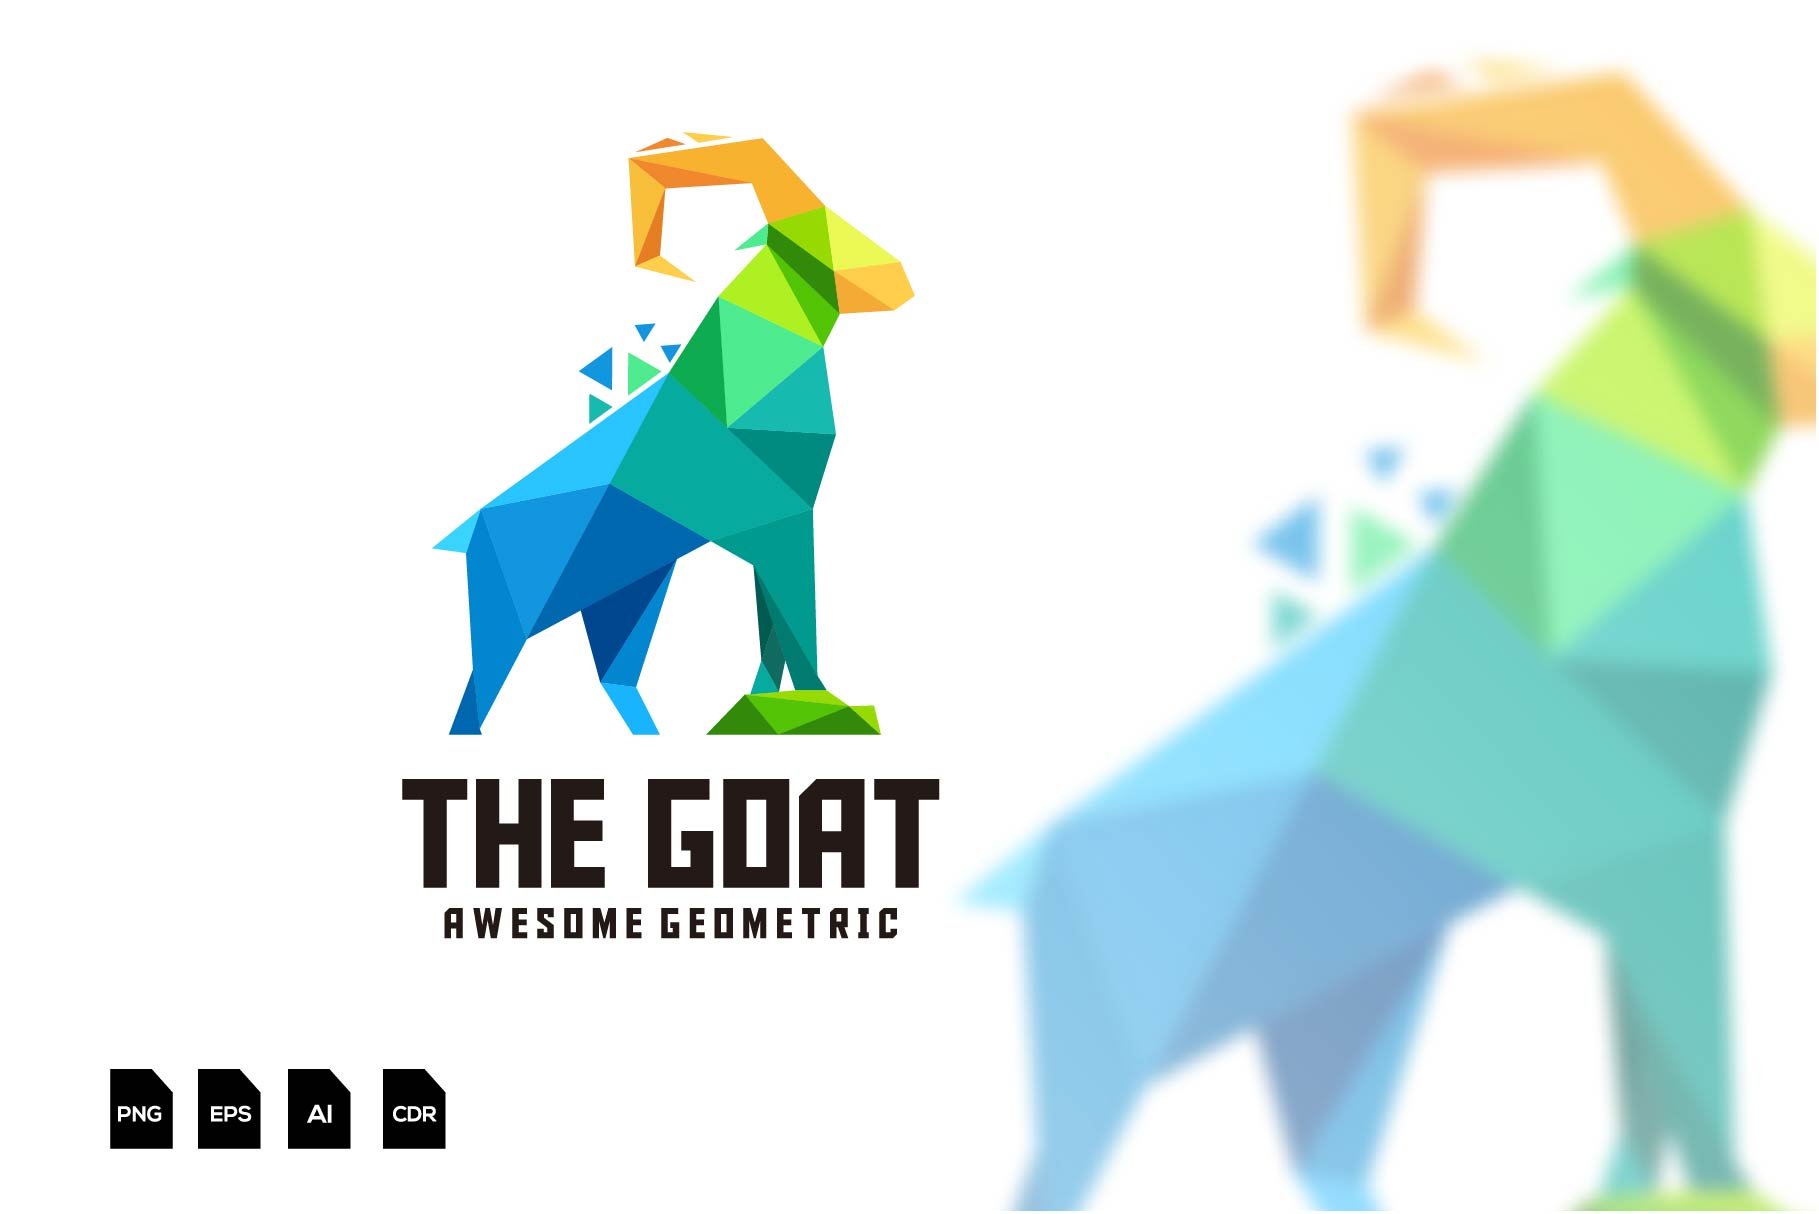 Goat geometric colorful logo cover image.